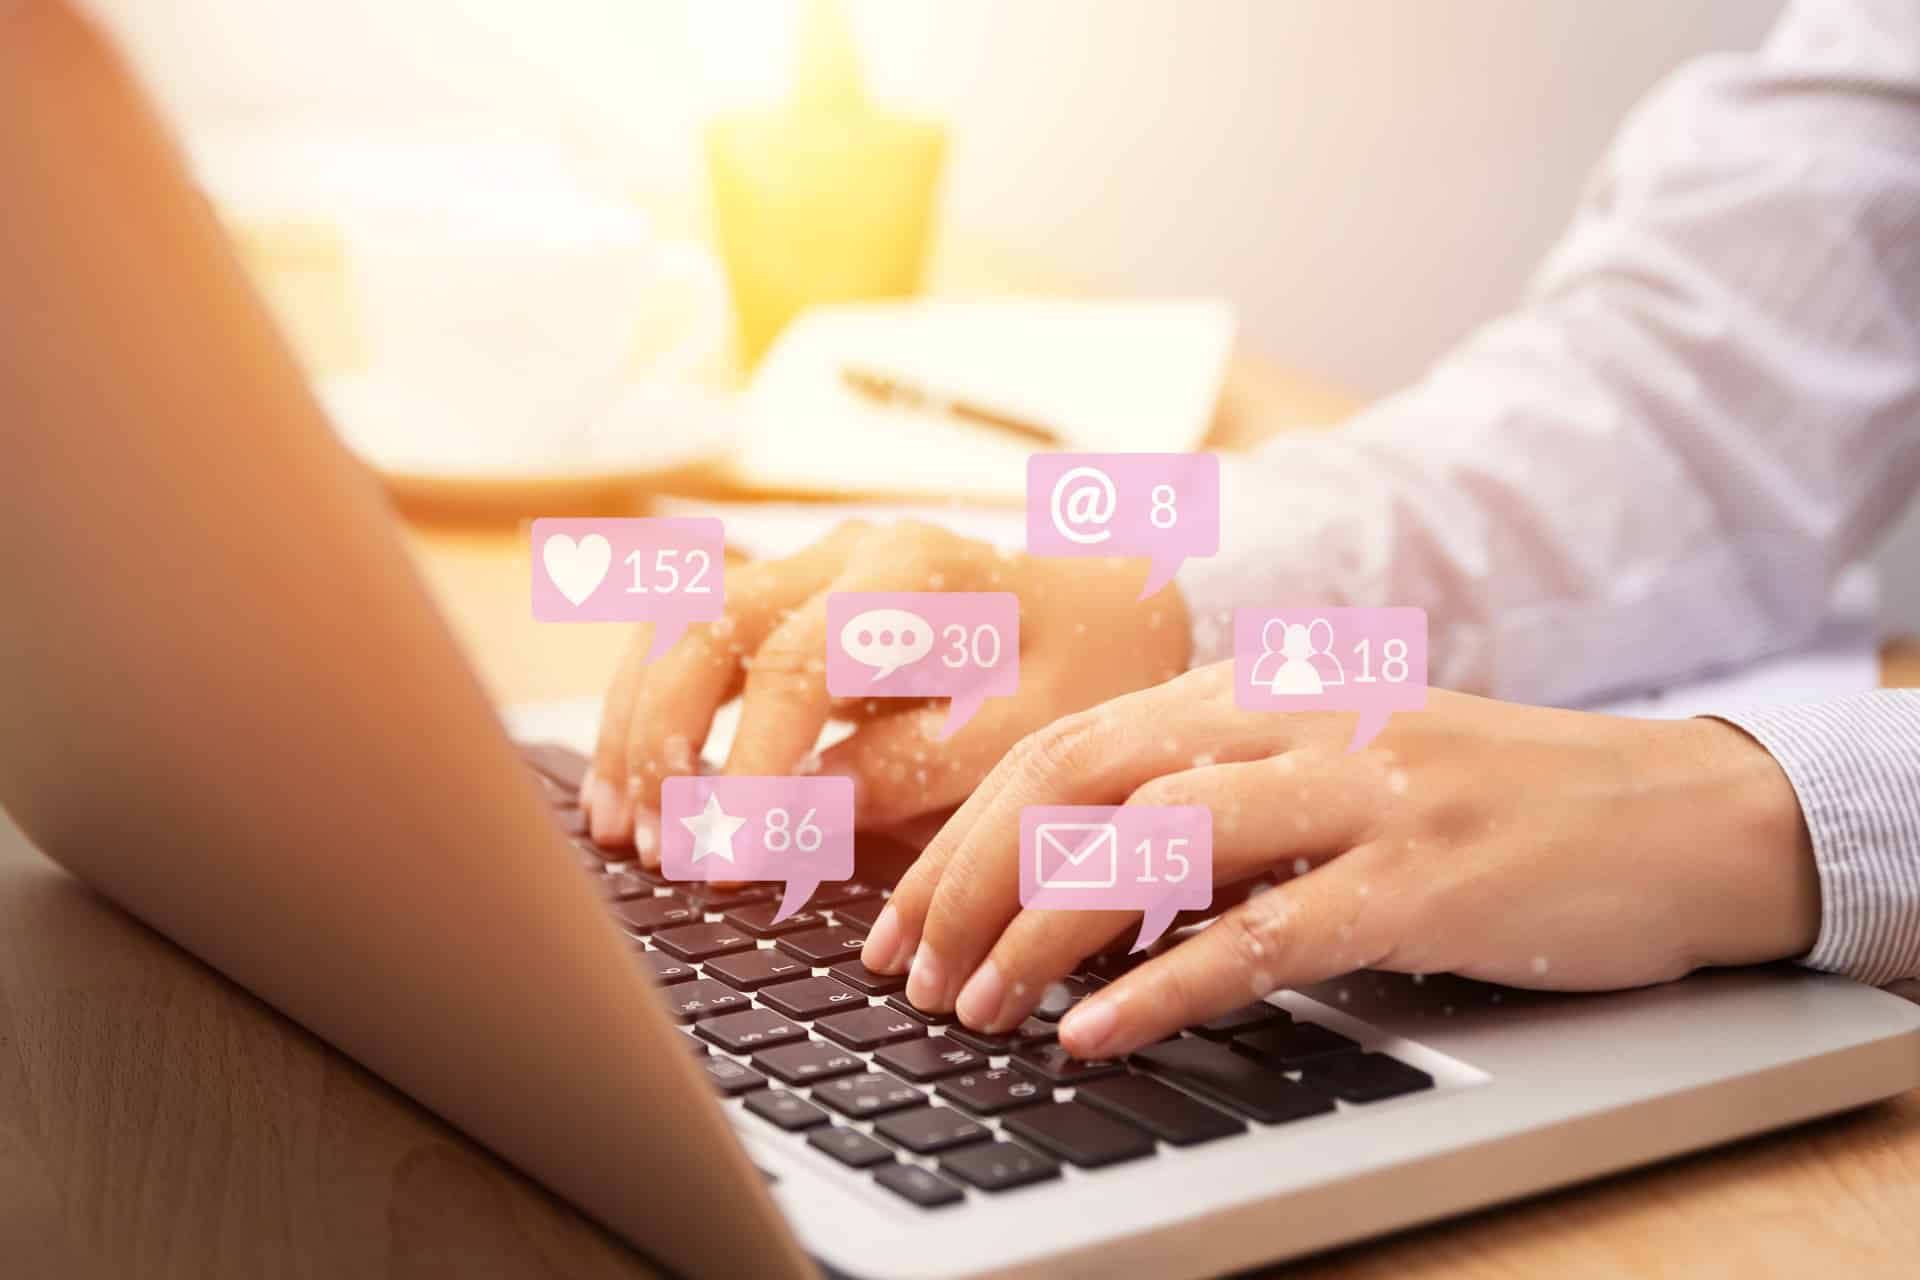 10 Ways to Increase User Engagement through Social Media